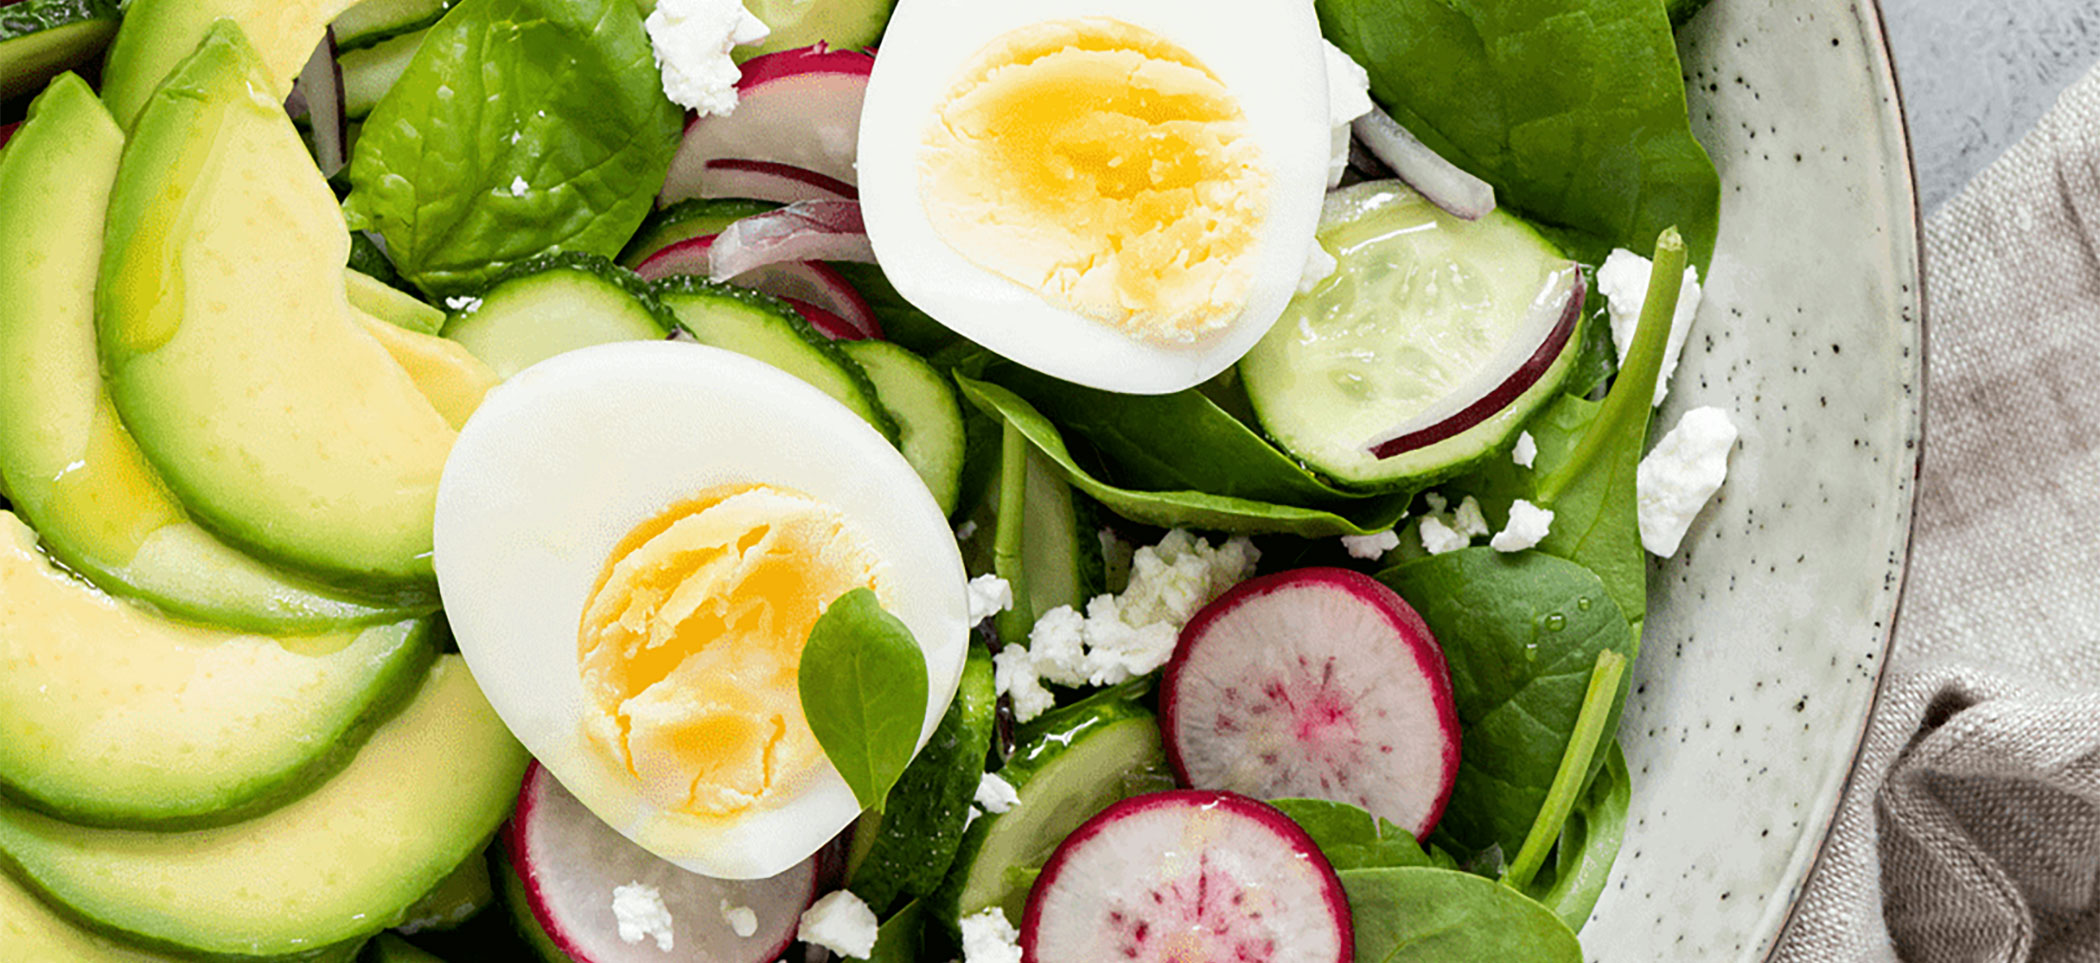 green salad with avocado, radish, and egg